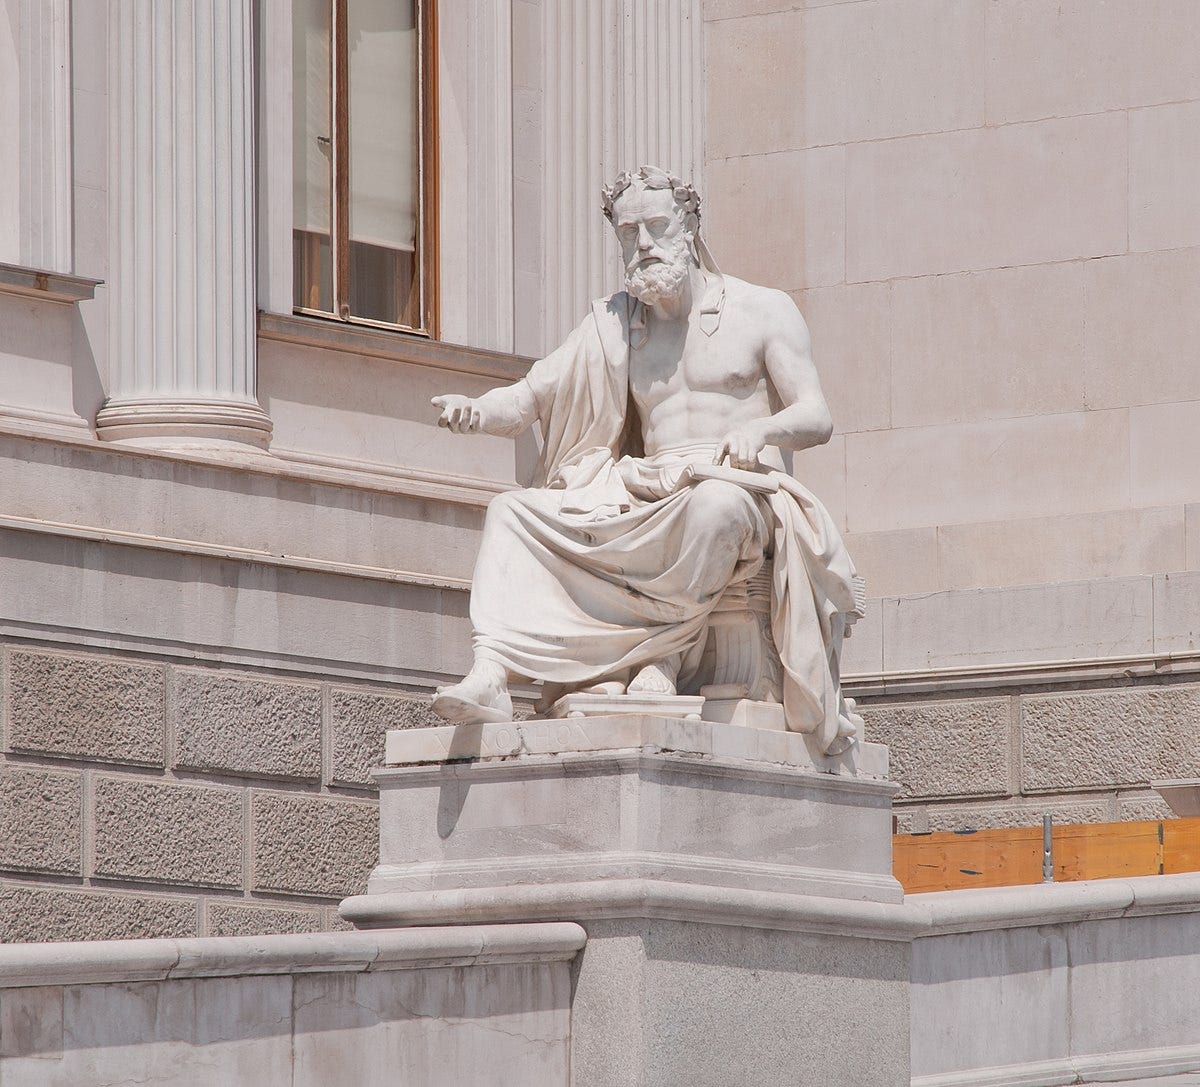 File:Xenophon statue - Vienna.jpg - Wikimedia Commons